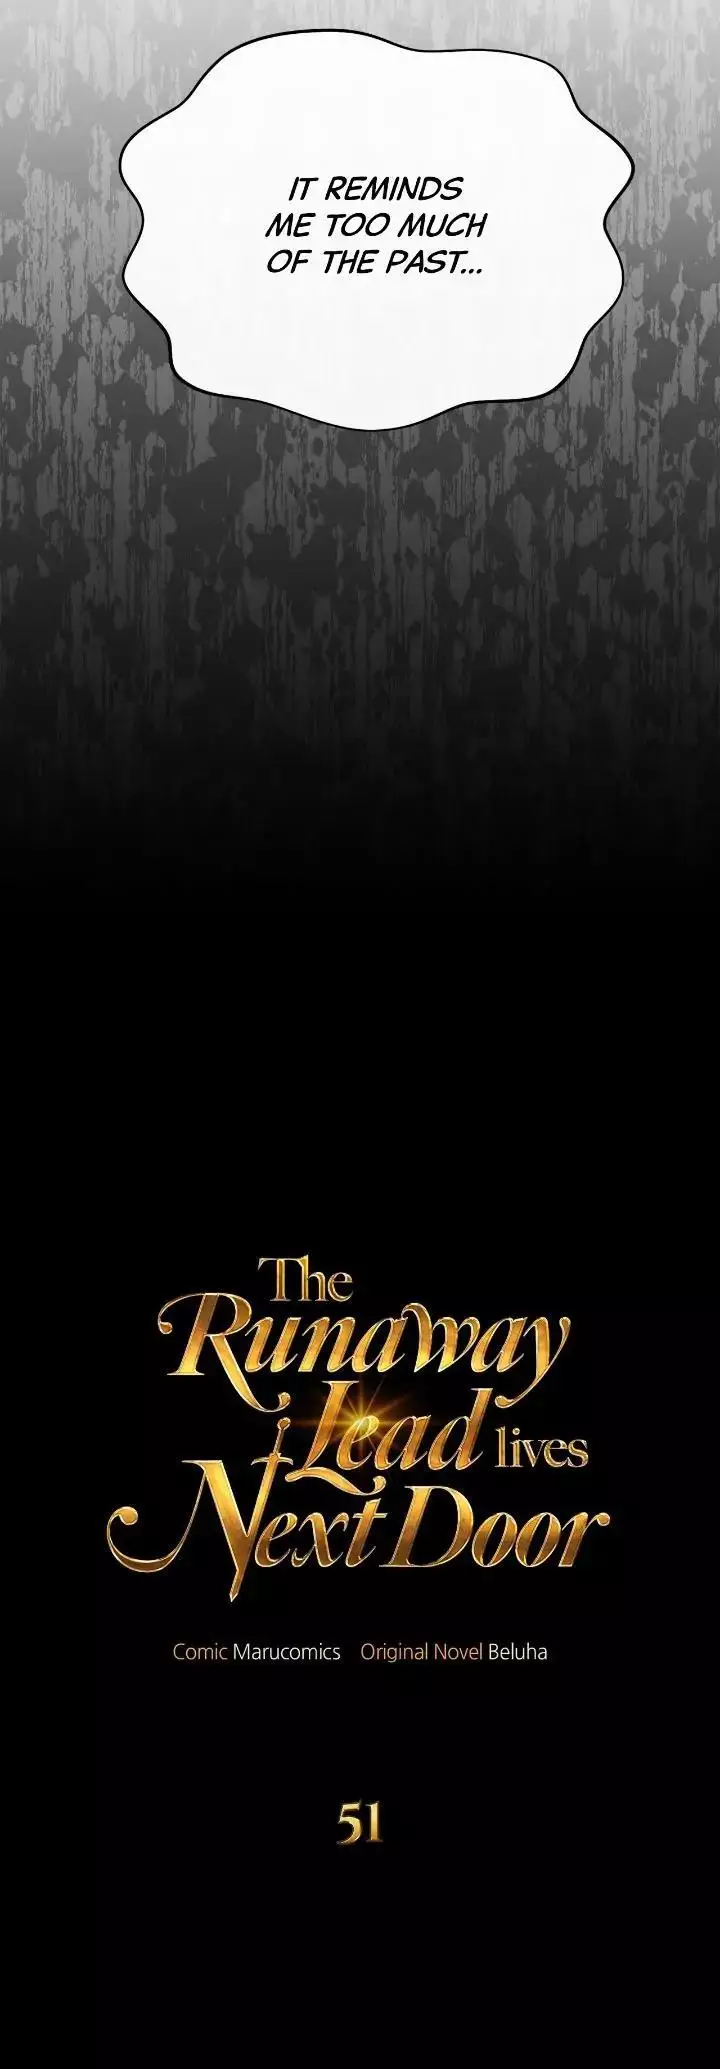 The Runaway Lead Lives Next Door - 51 page 20-fe09c396